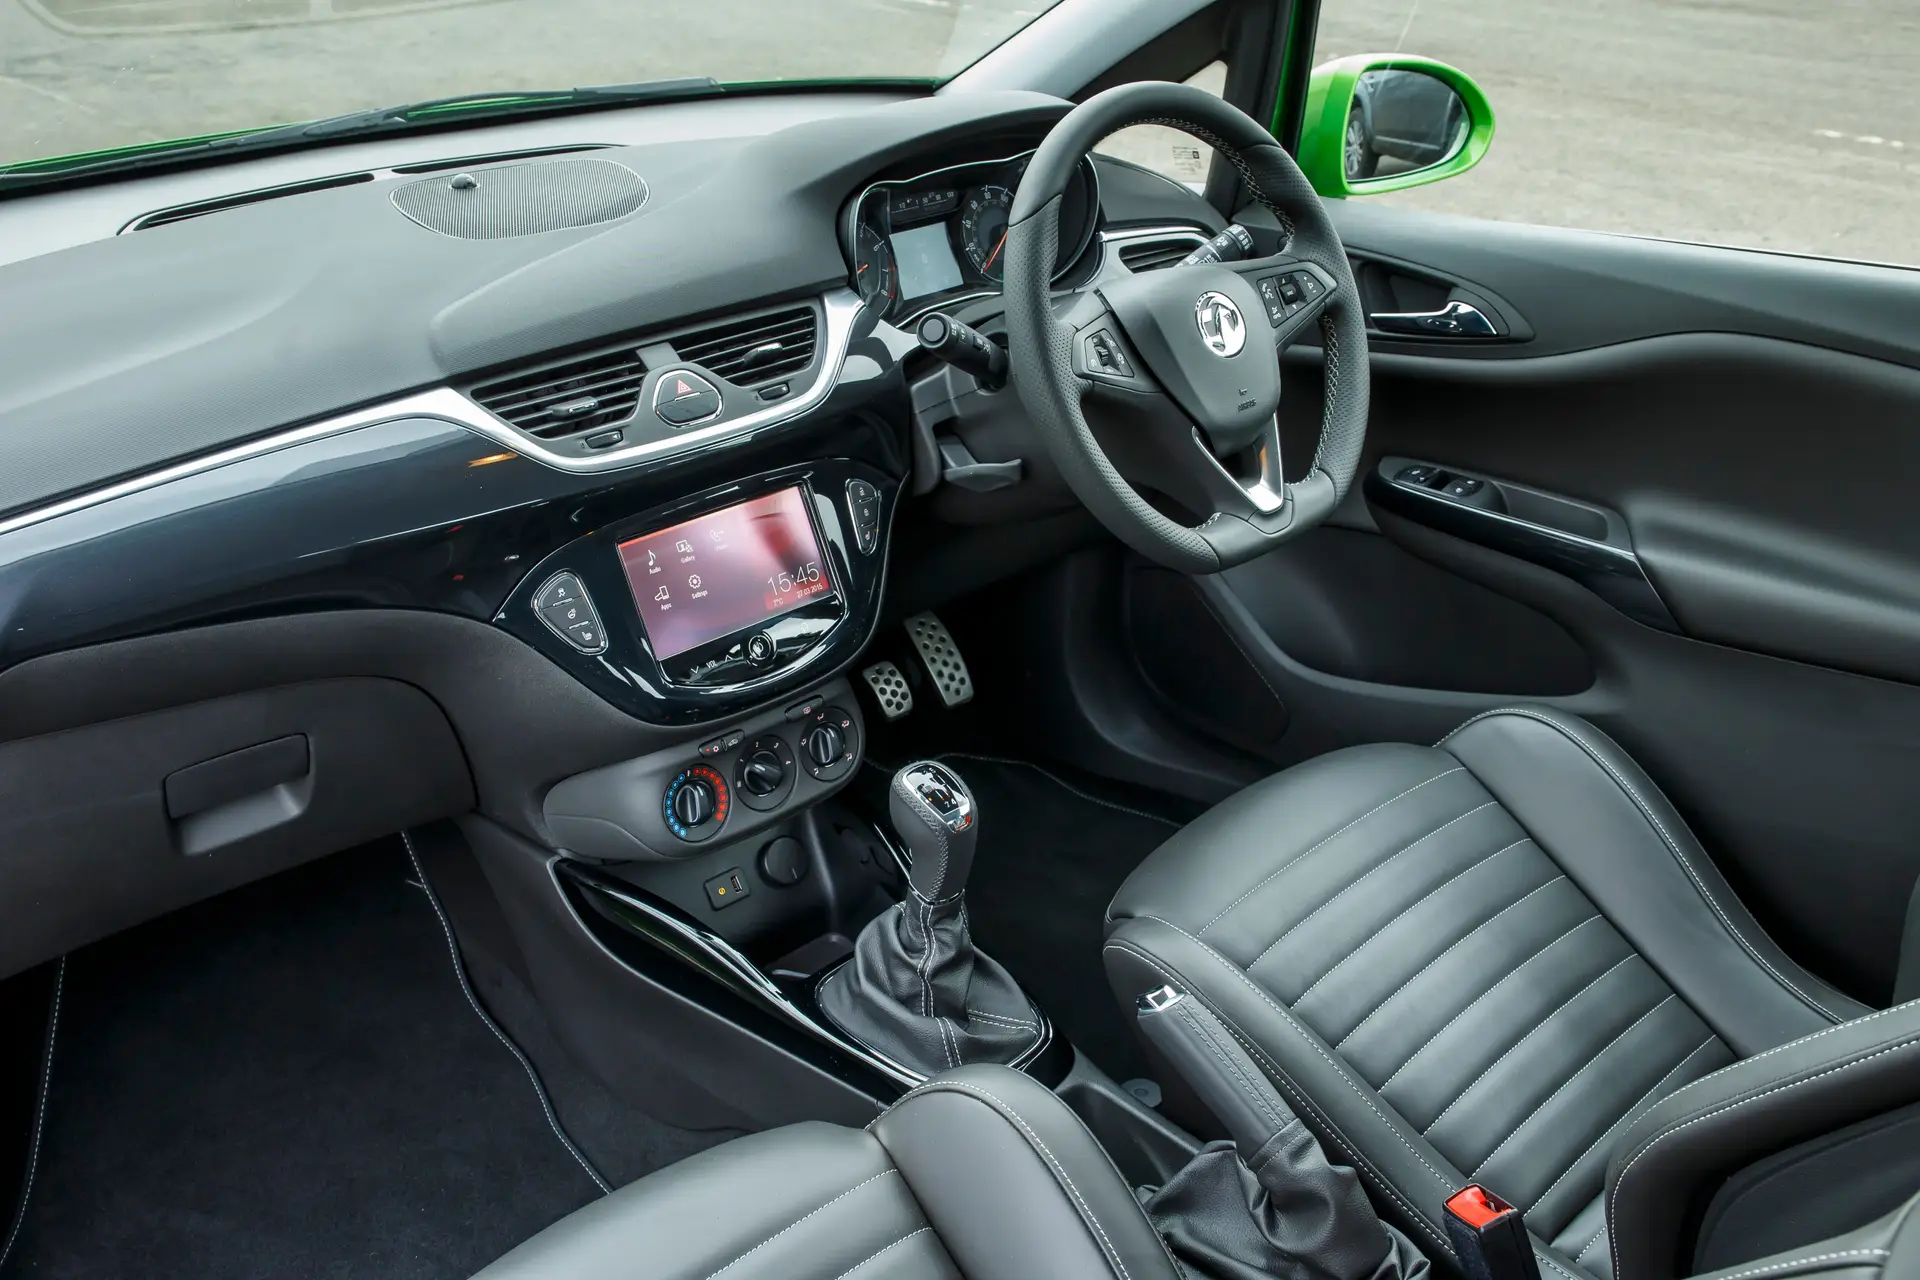 Vauxhall Corsa VXR interior